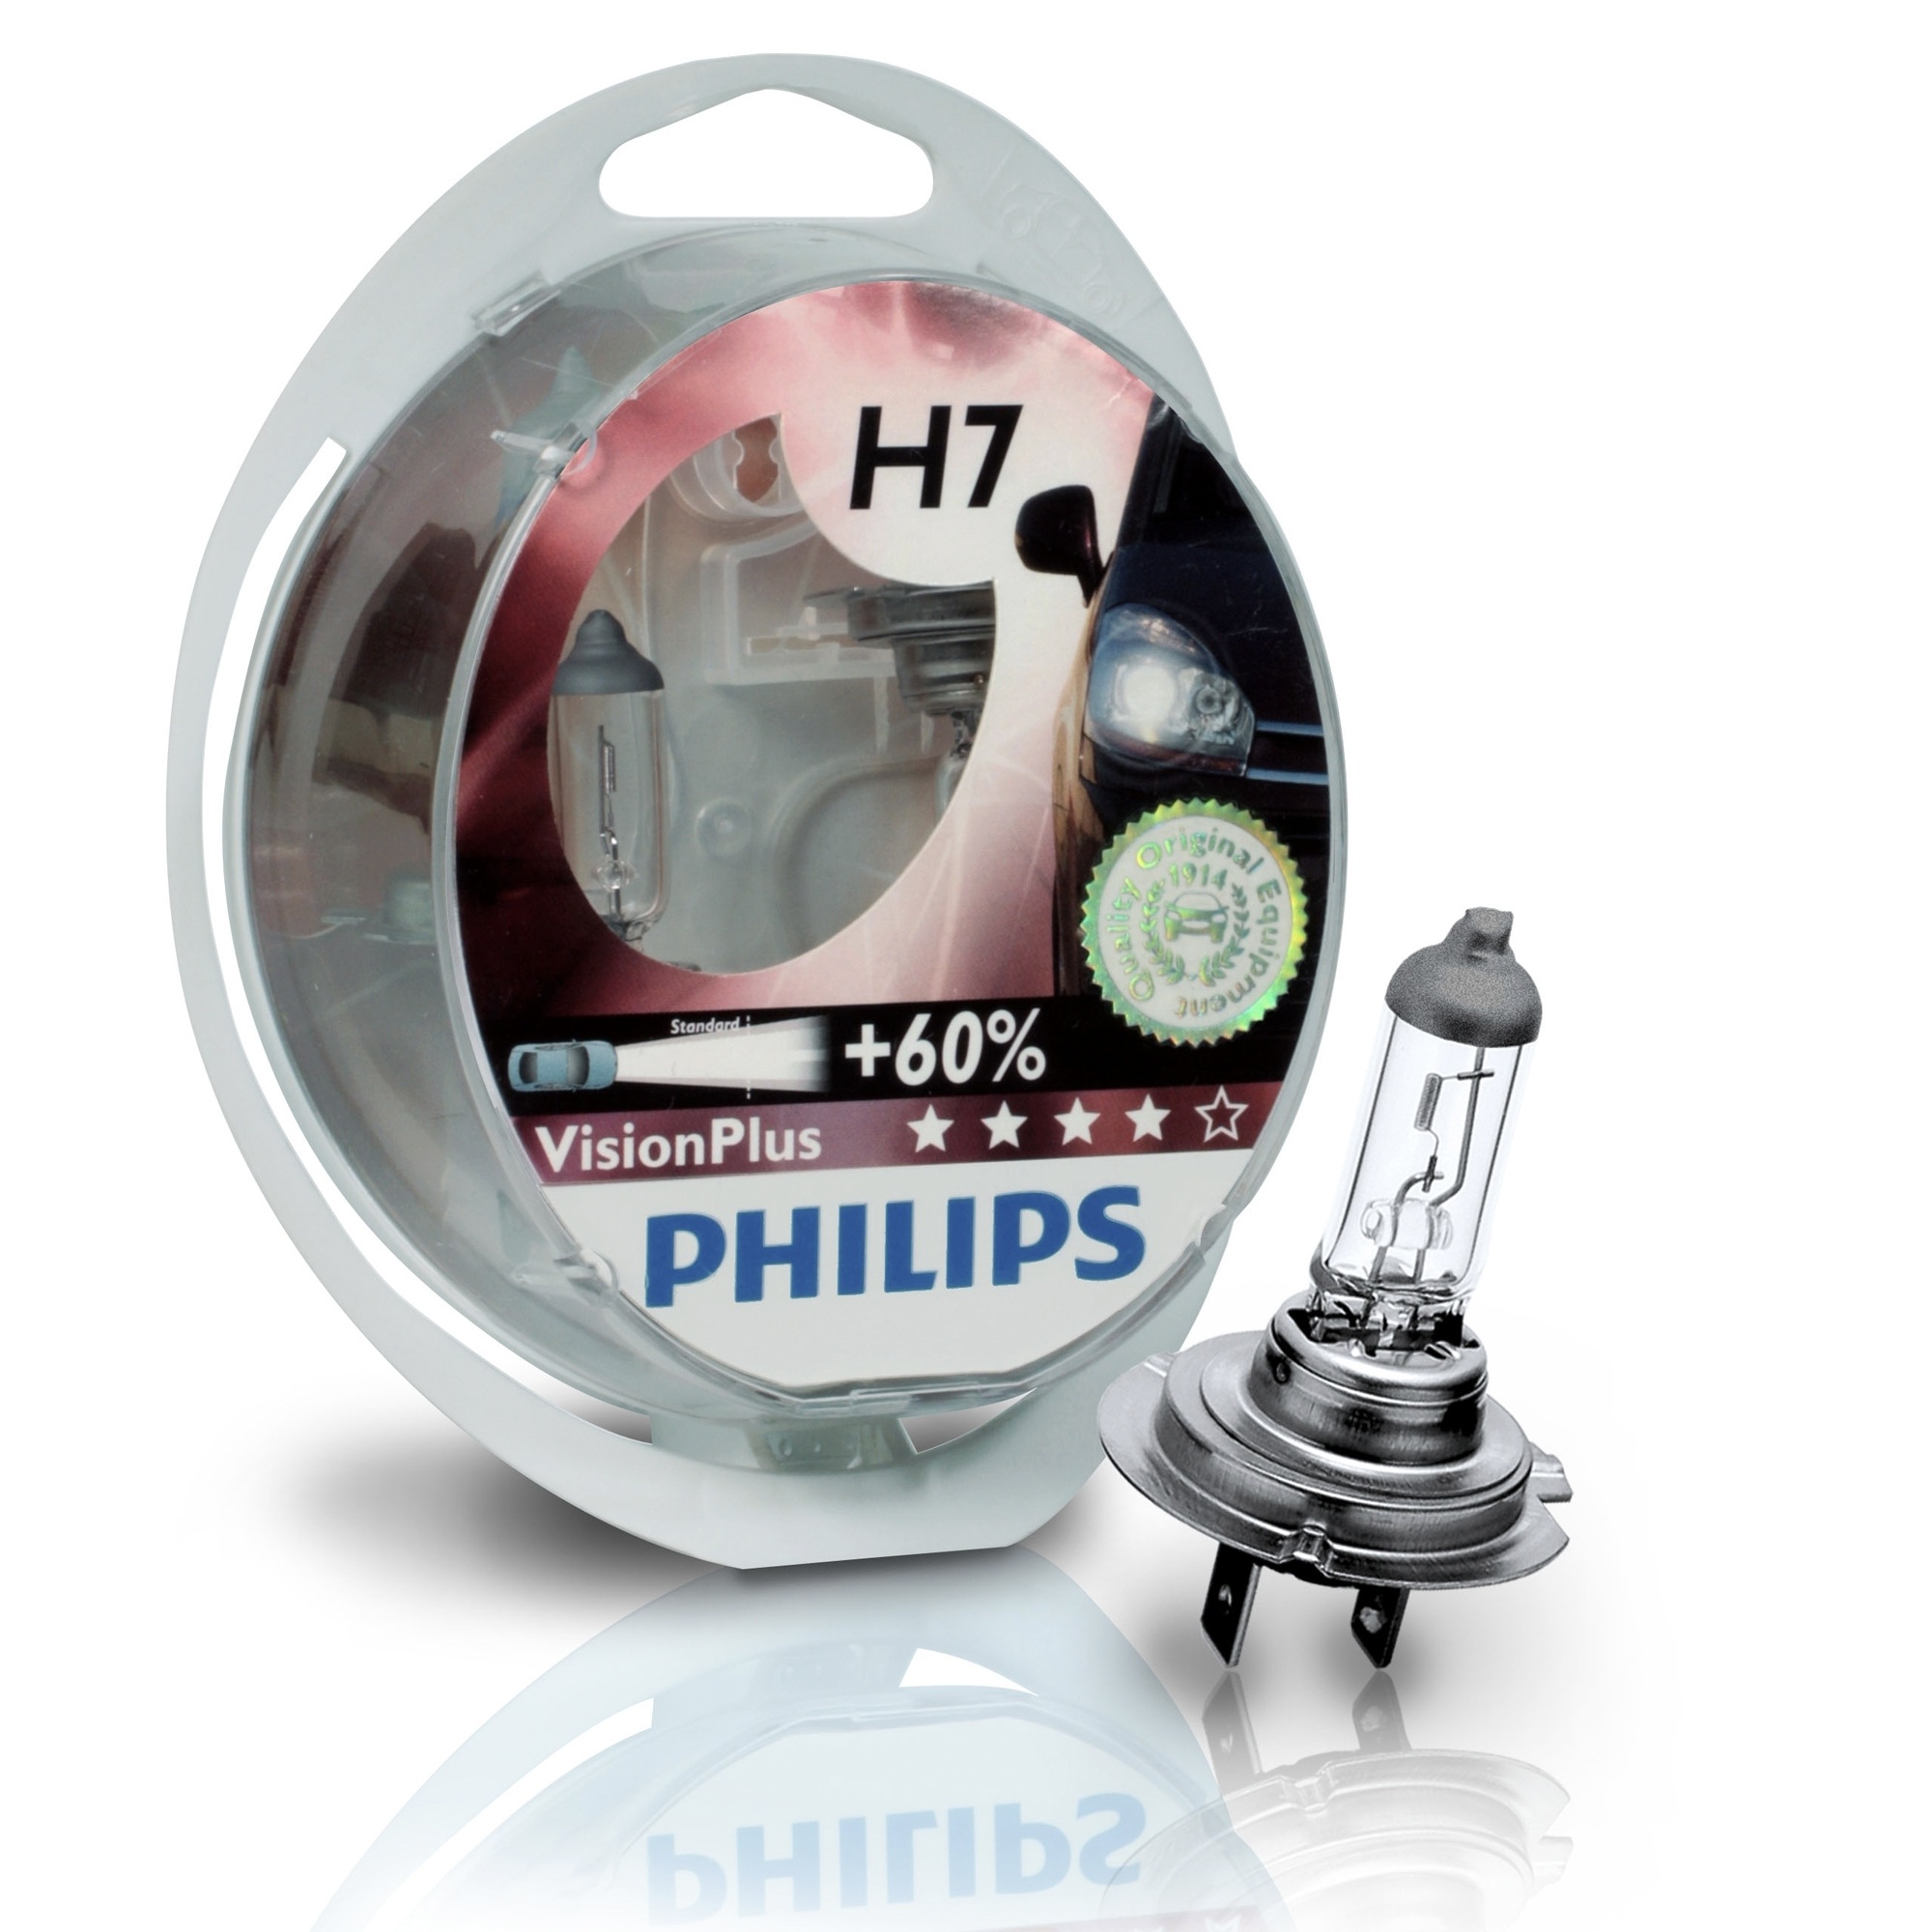 Philips vision купить. Лампочки Филипс Vision Plus h7. Philips Vision Plus +60. Лампа автомобильная галогенная Philips Vision Plus 12972vps2 h7 55w 2 шт.. Philips h7 Vision +60.